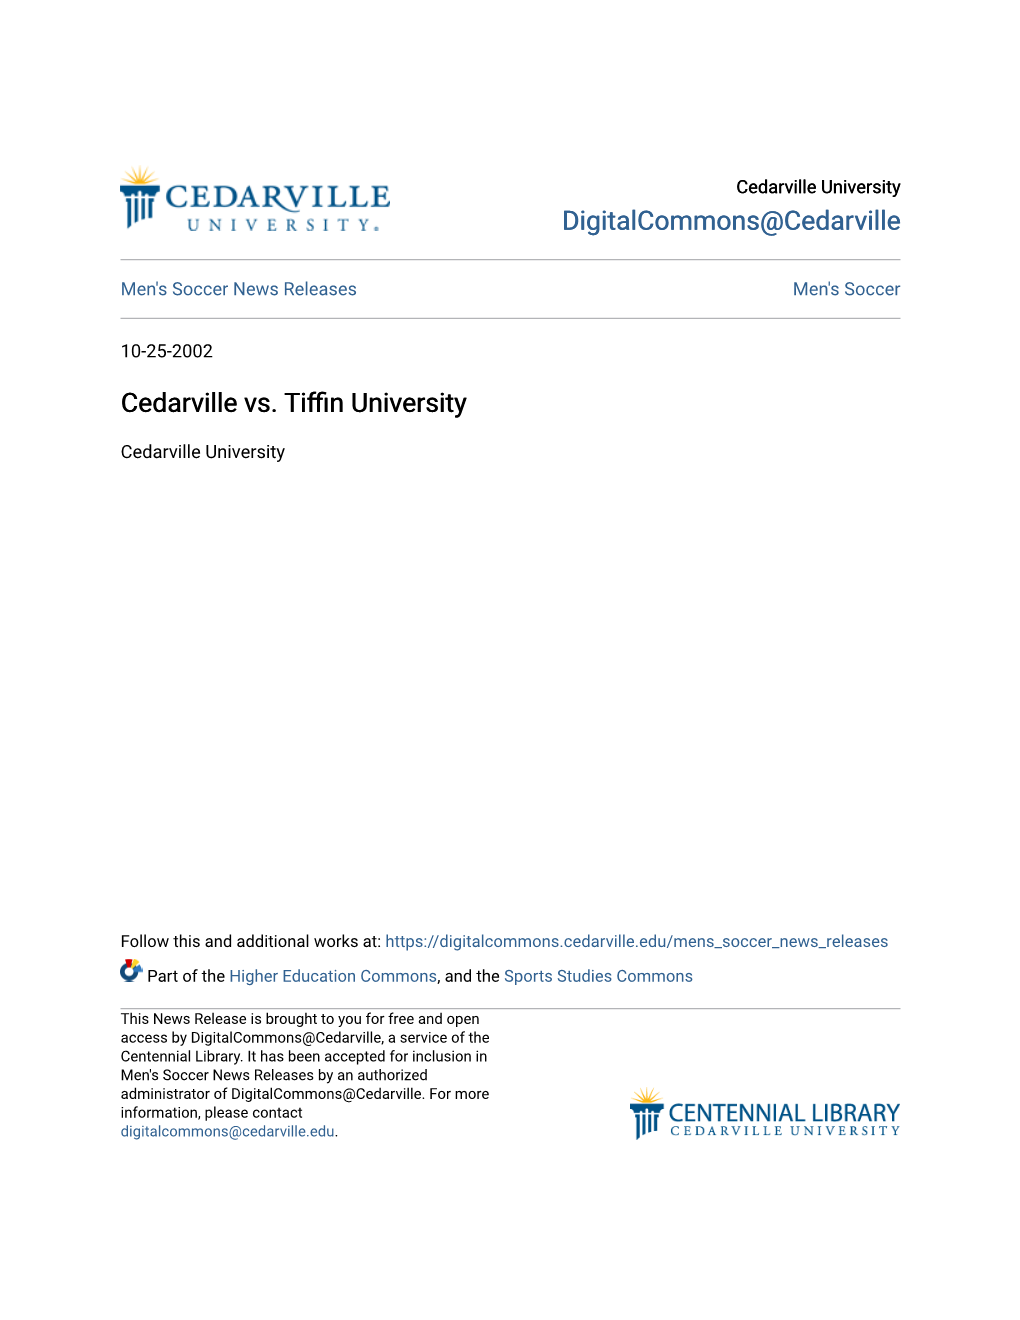 Cedarville Vs. Tiffin University